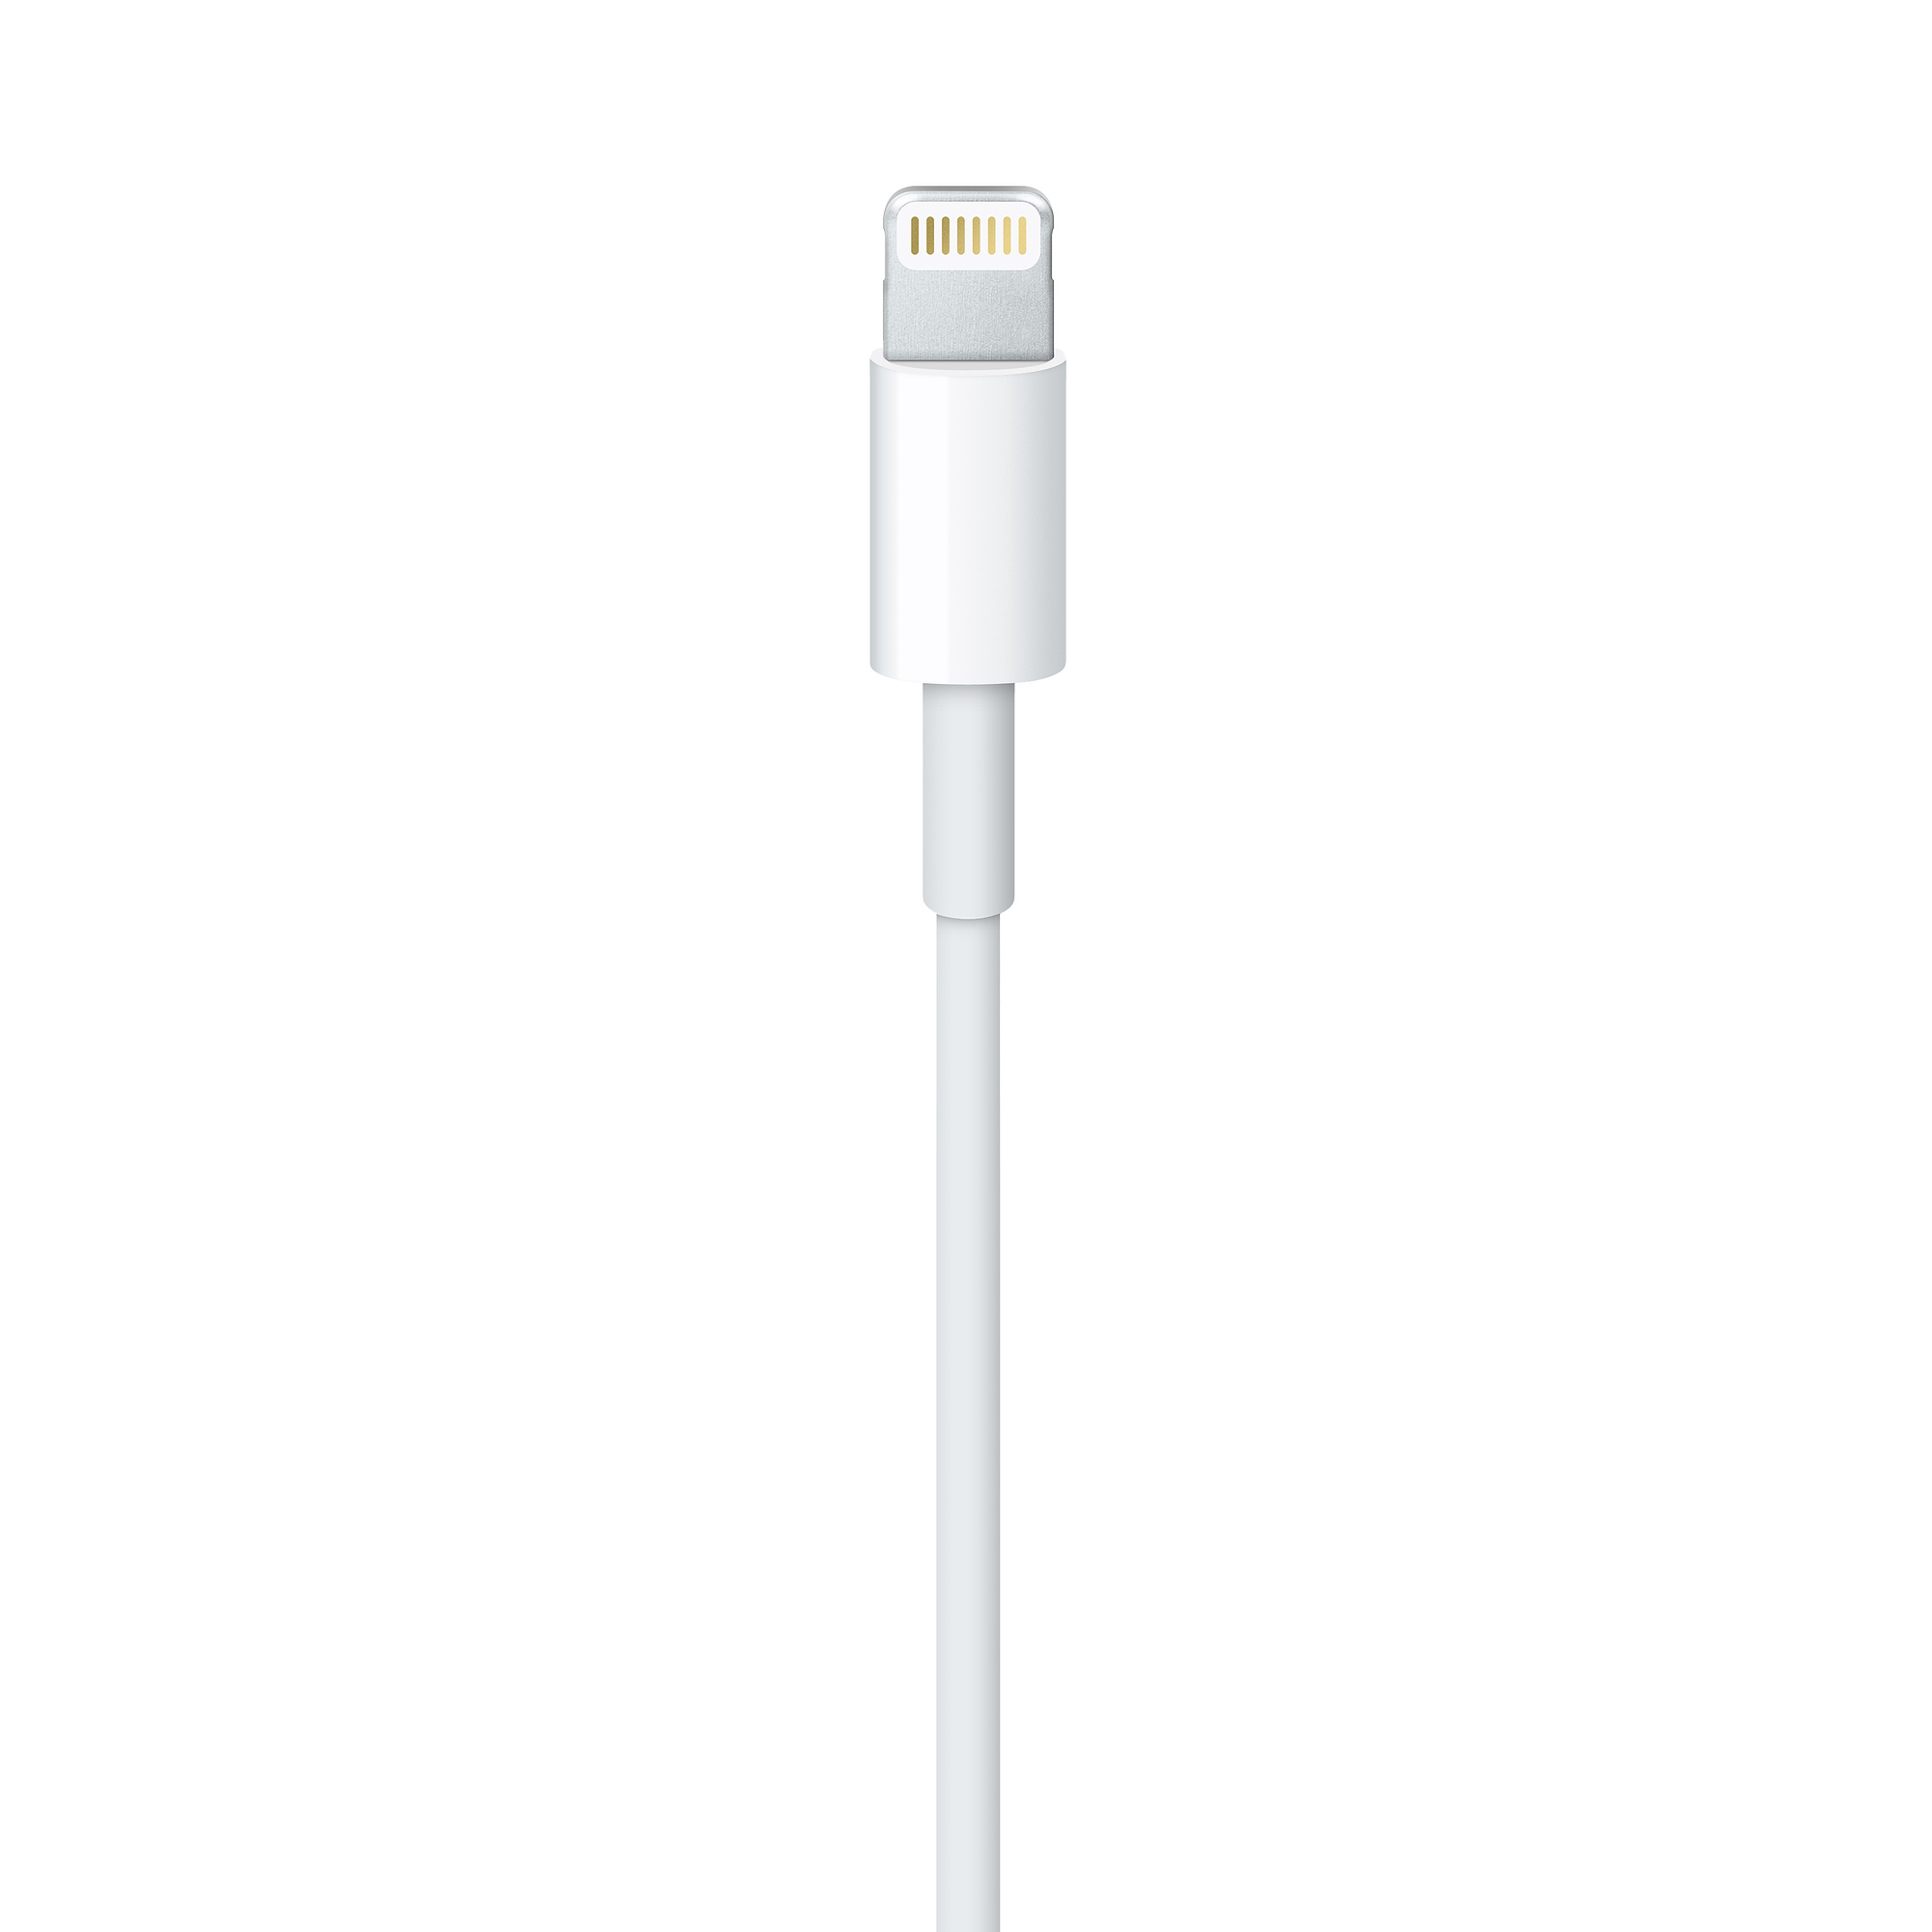 Cáp Lightning đầu USB cho iPhone, iPad, iPod Apple